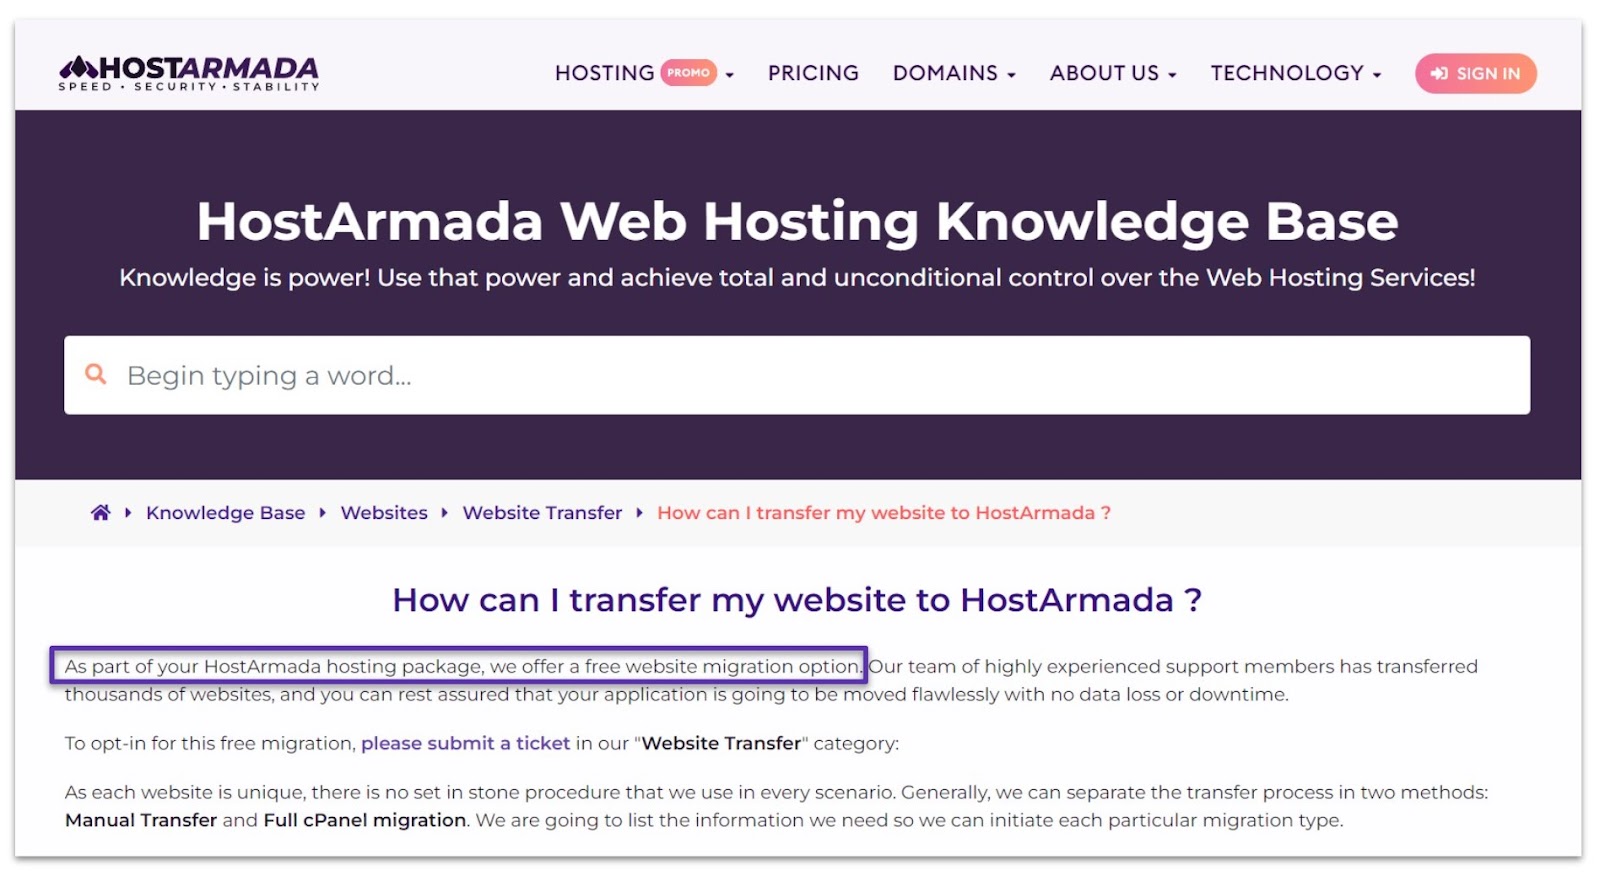 HostArmada free website migration services